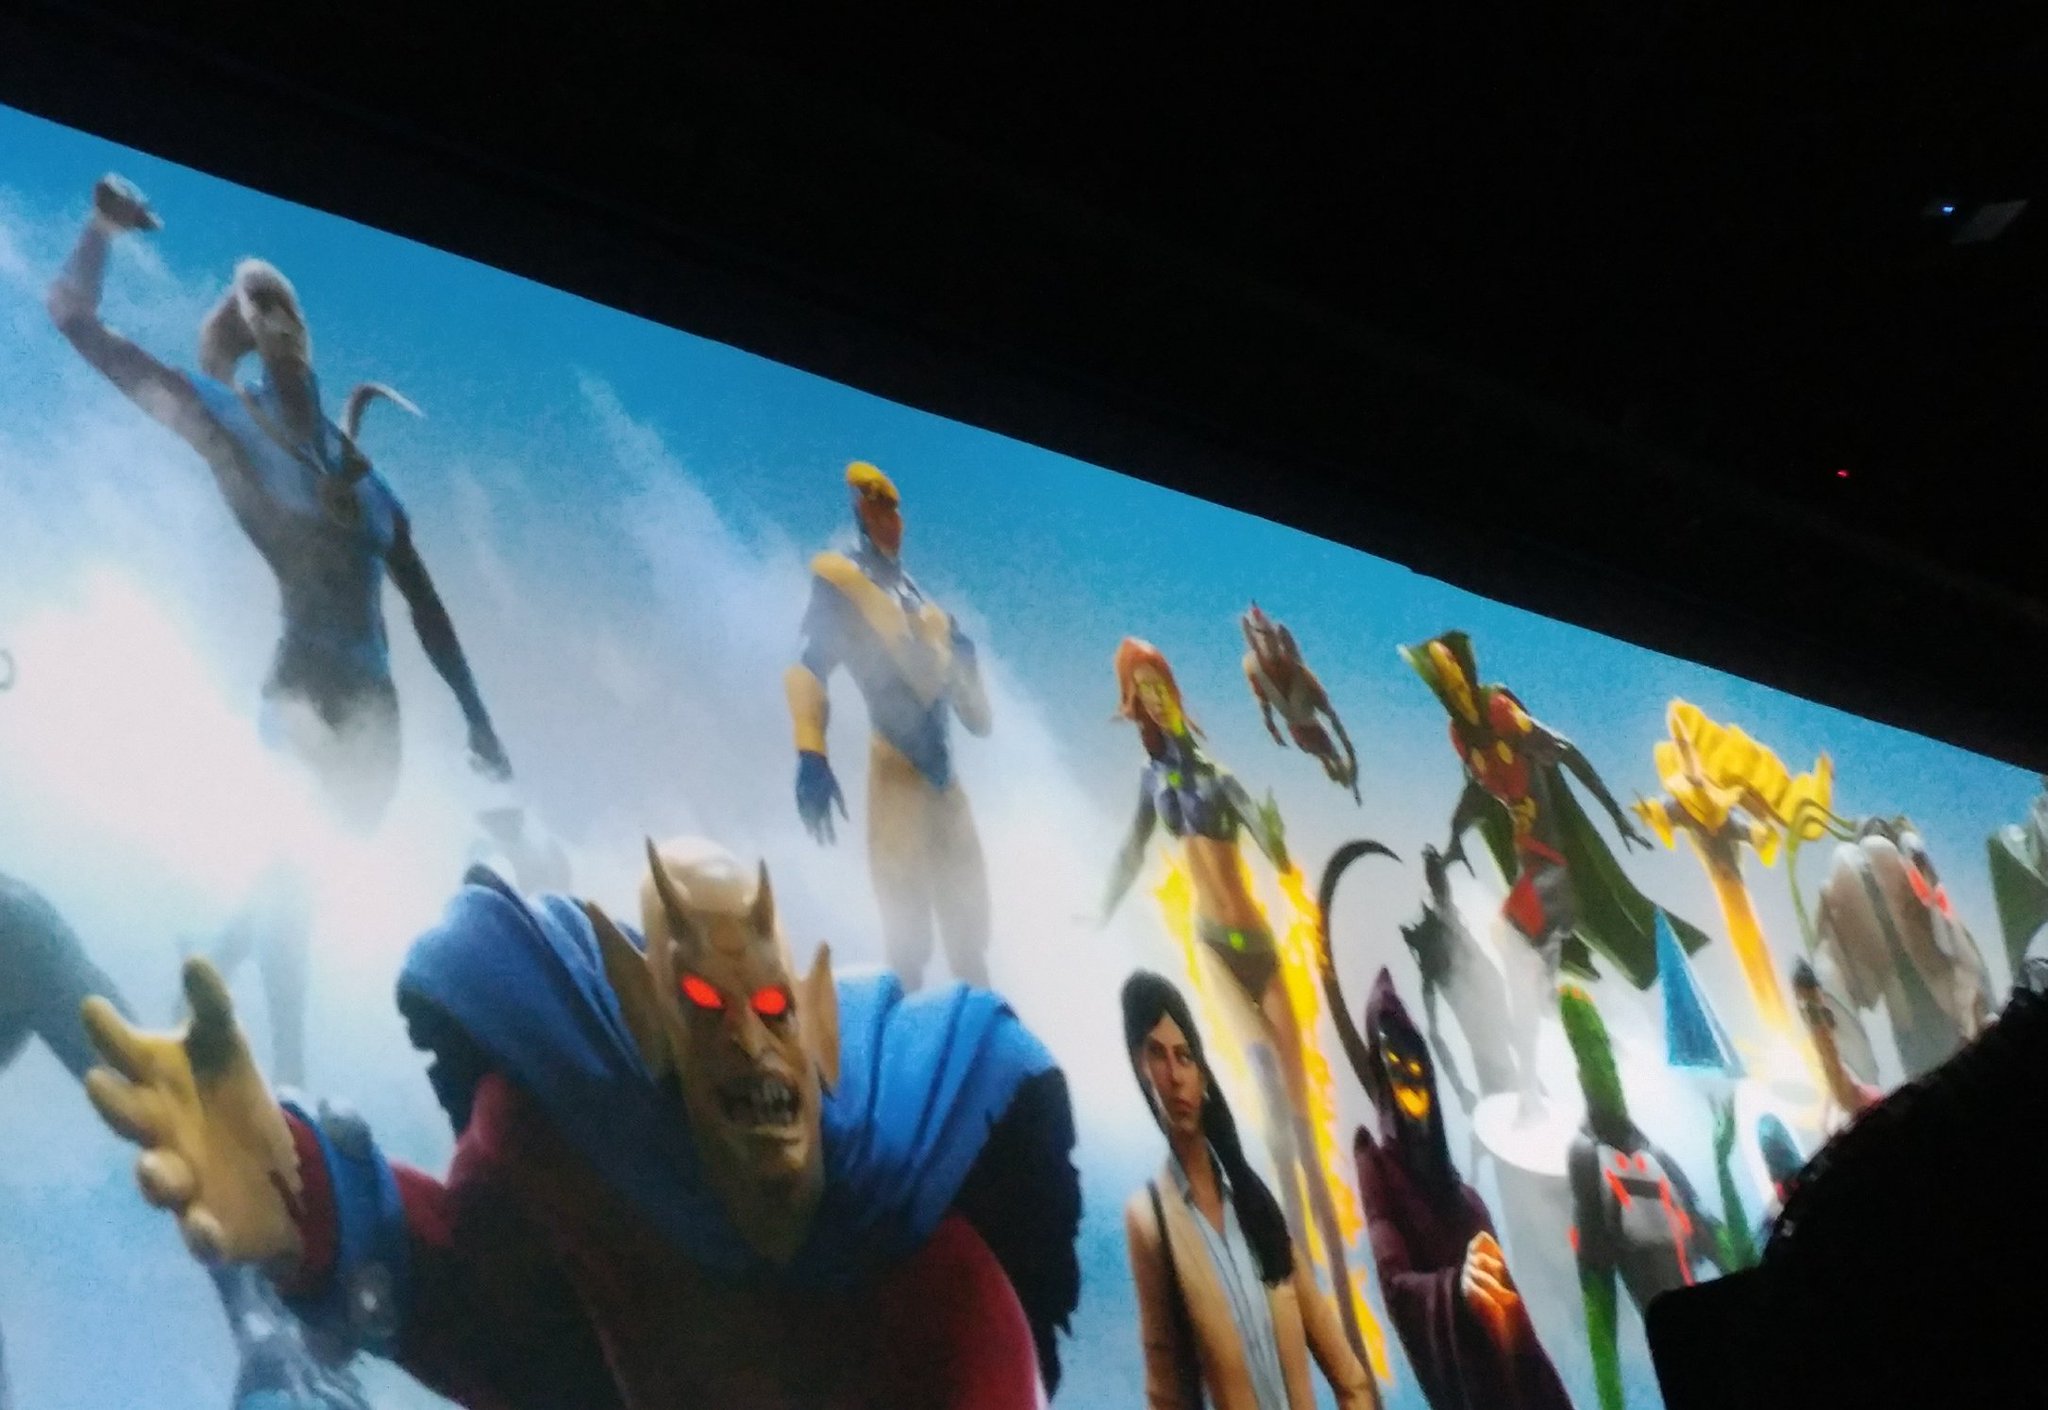 Justice League Comic-Con Trailer & New DCEU Movies Announced